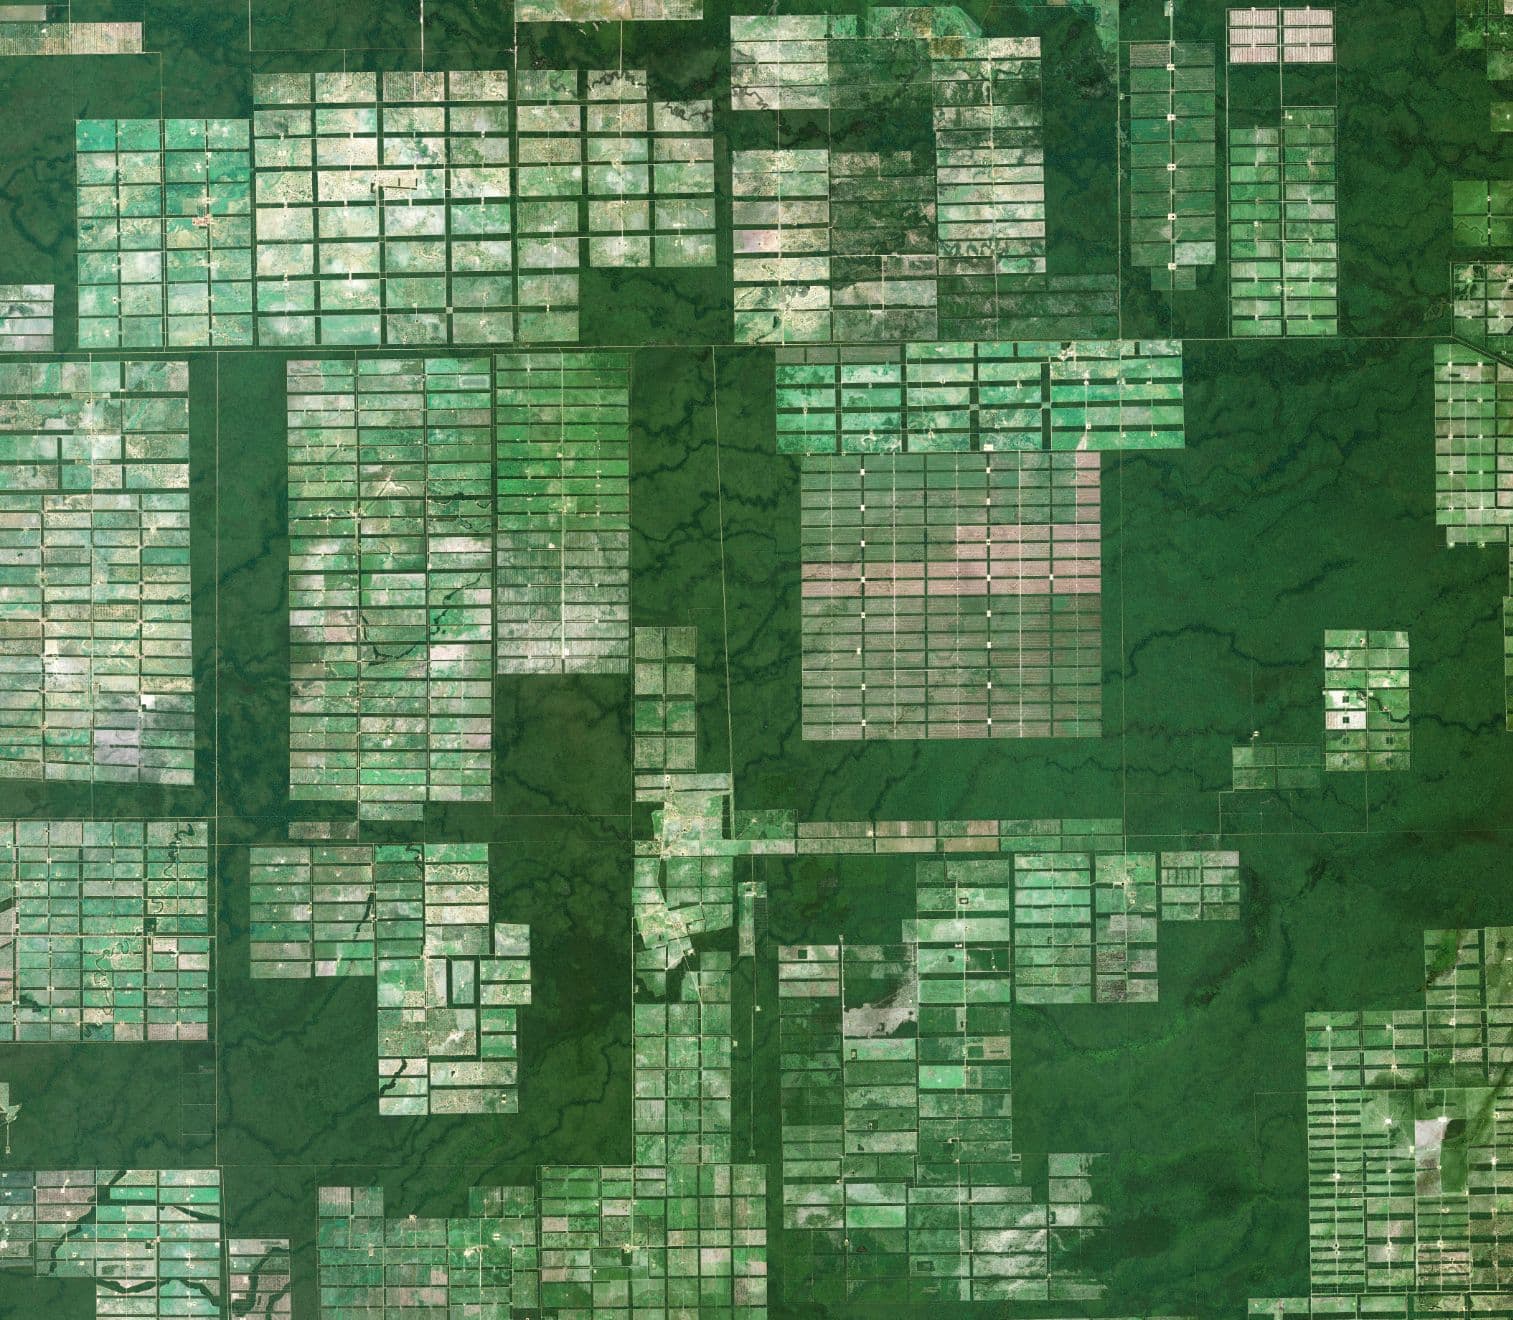 Deforestation in Bolivia, SPOT satellite imagery taken in 2022